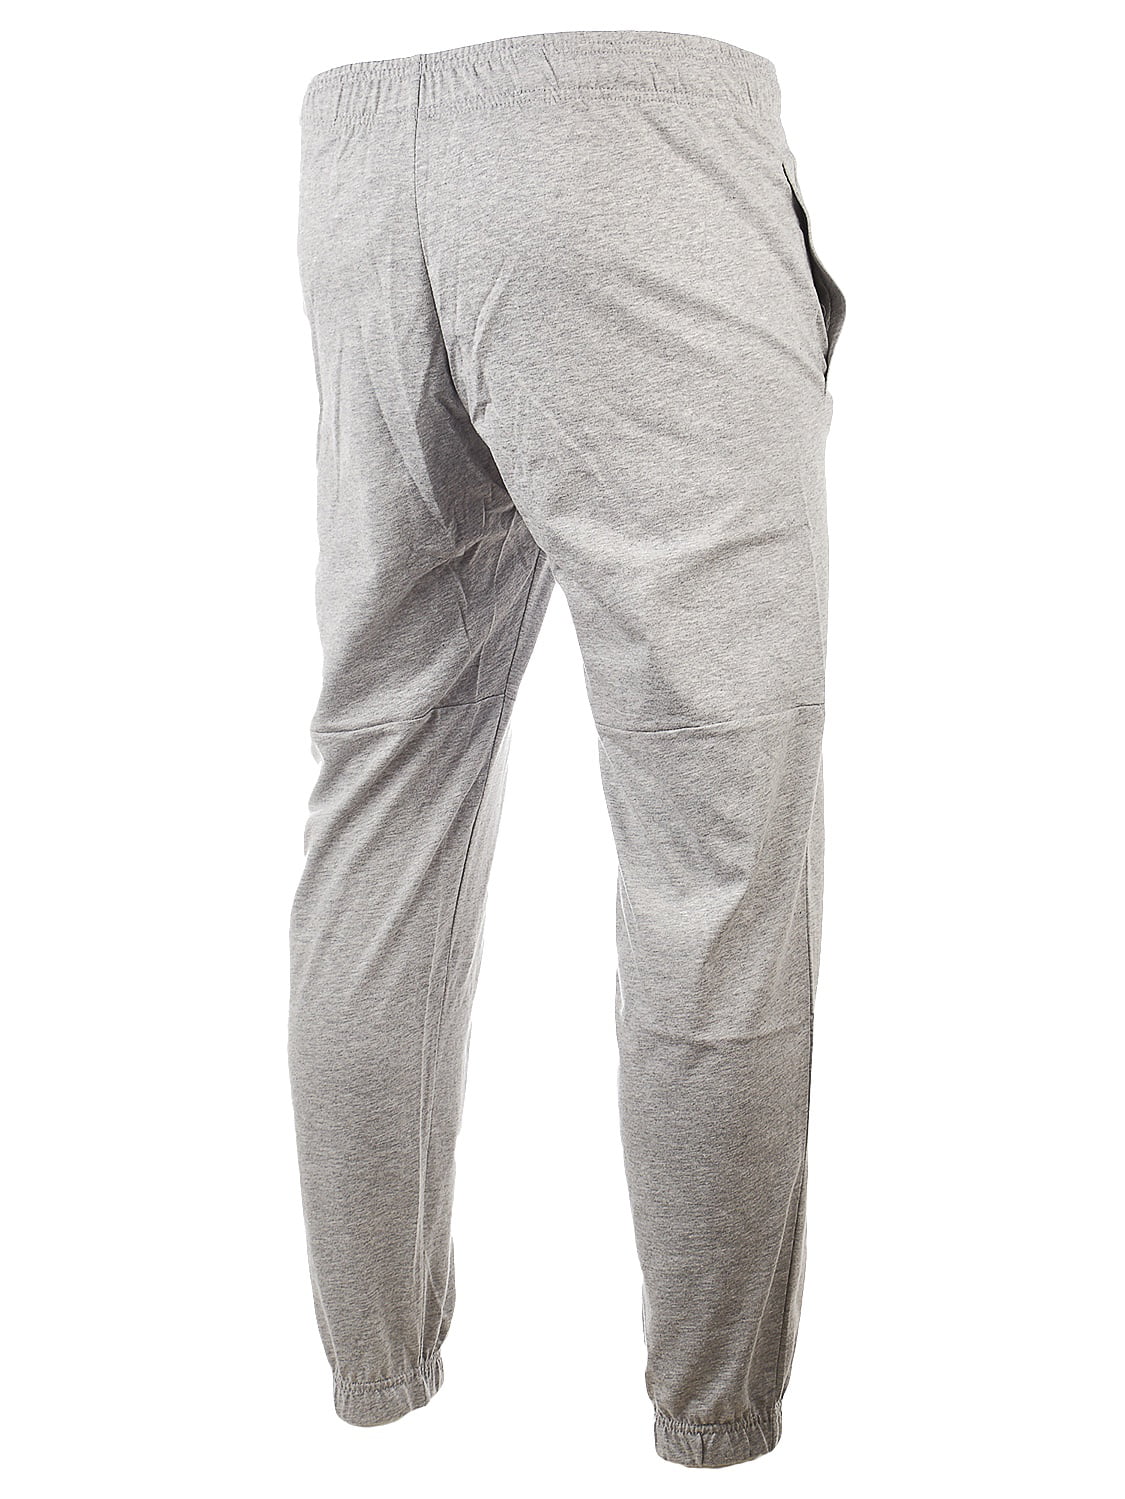 Grey - XL Adidas Pants Essentials Mens Performance Medium - Logo - Heather/White/Black